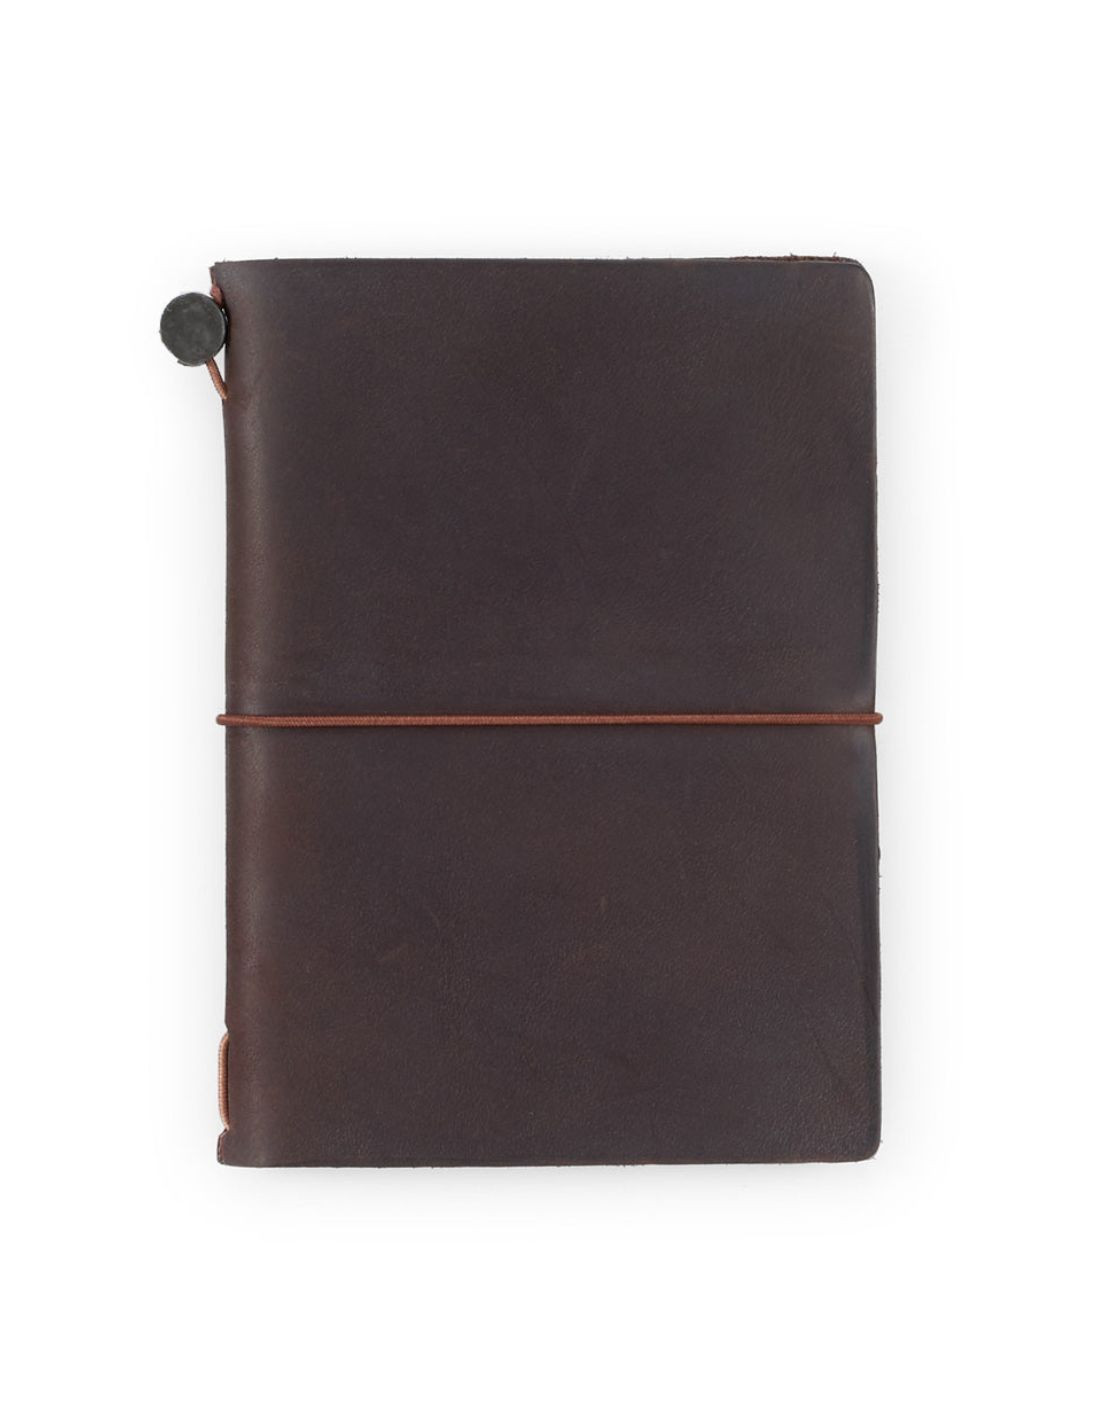 TRAVELER'S notebook - Passport Size Starter Kit - Brown